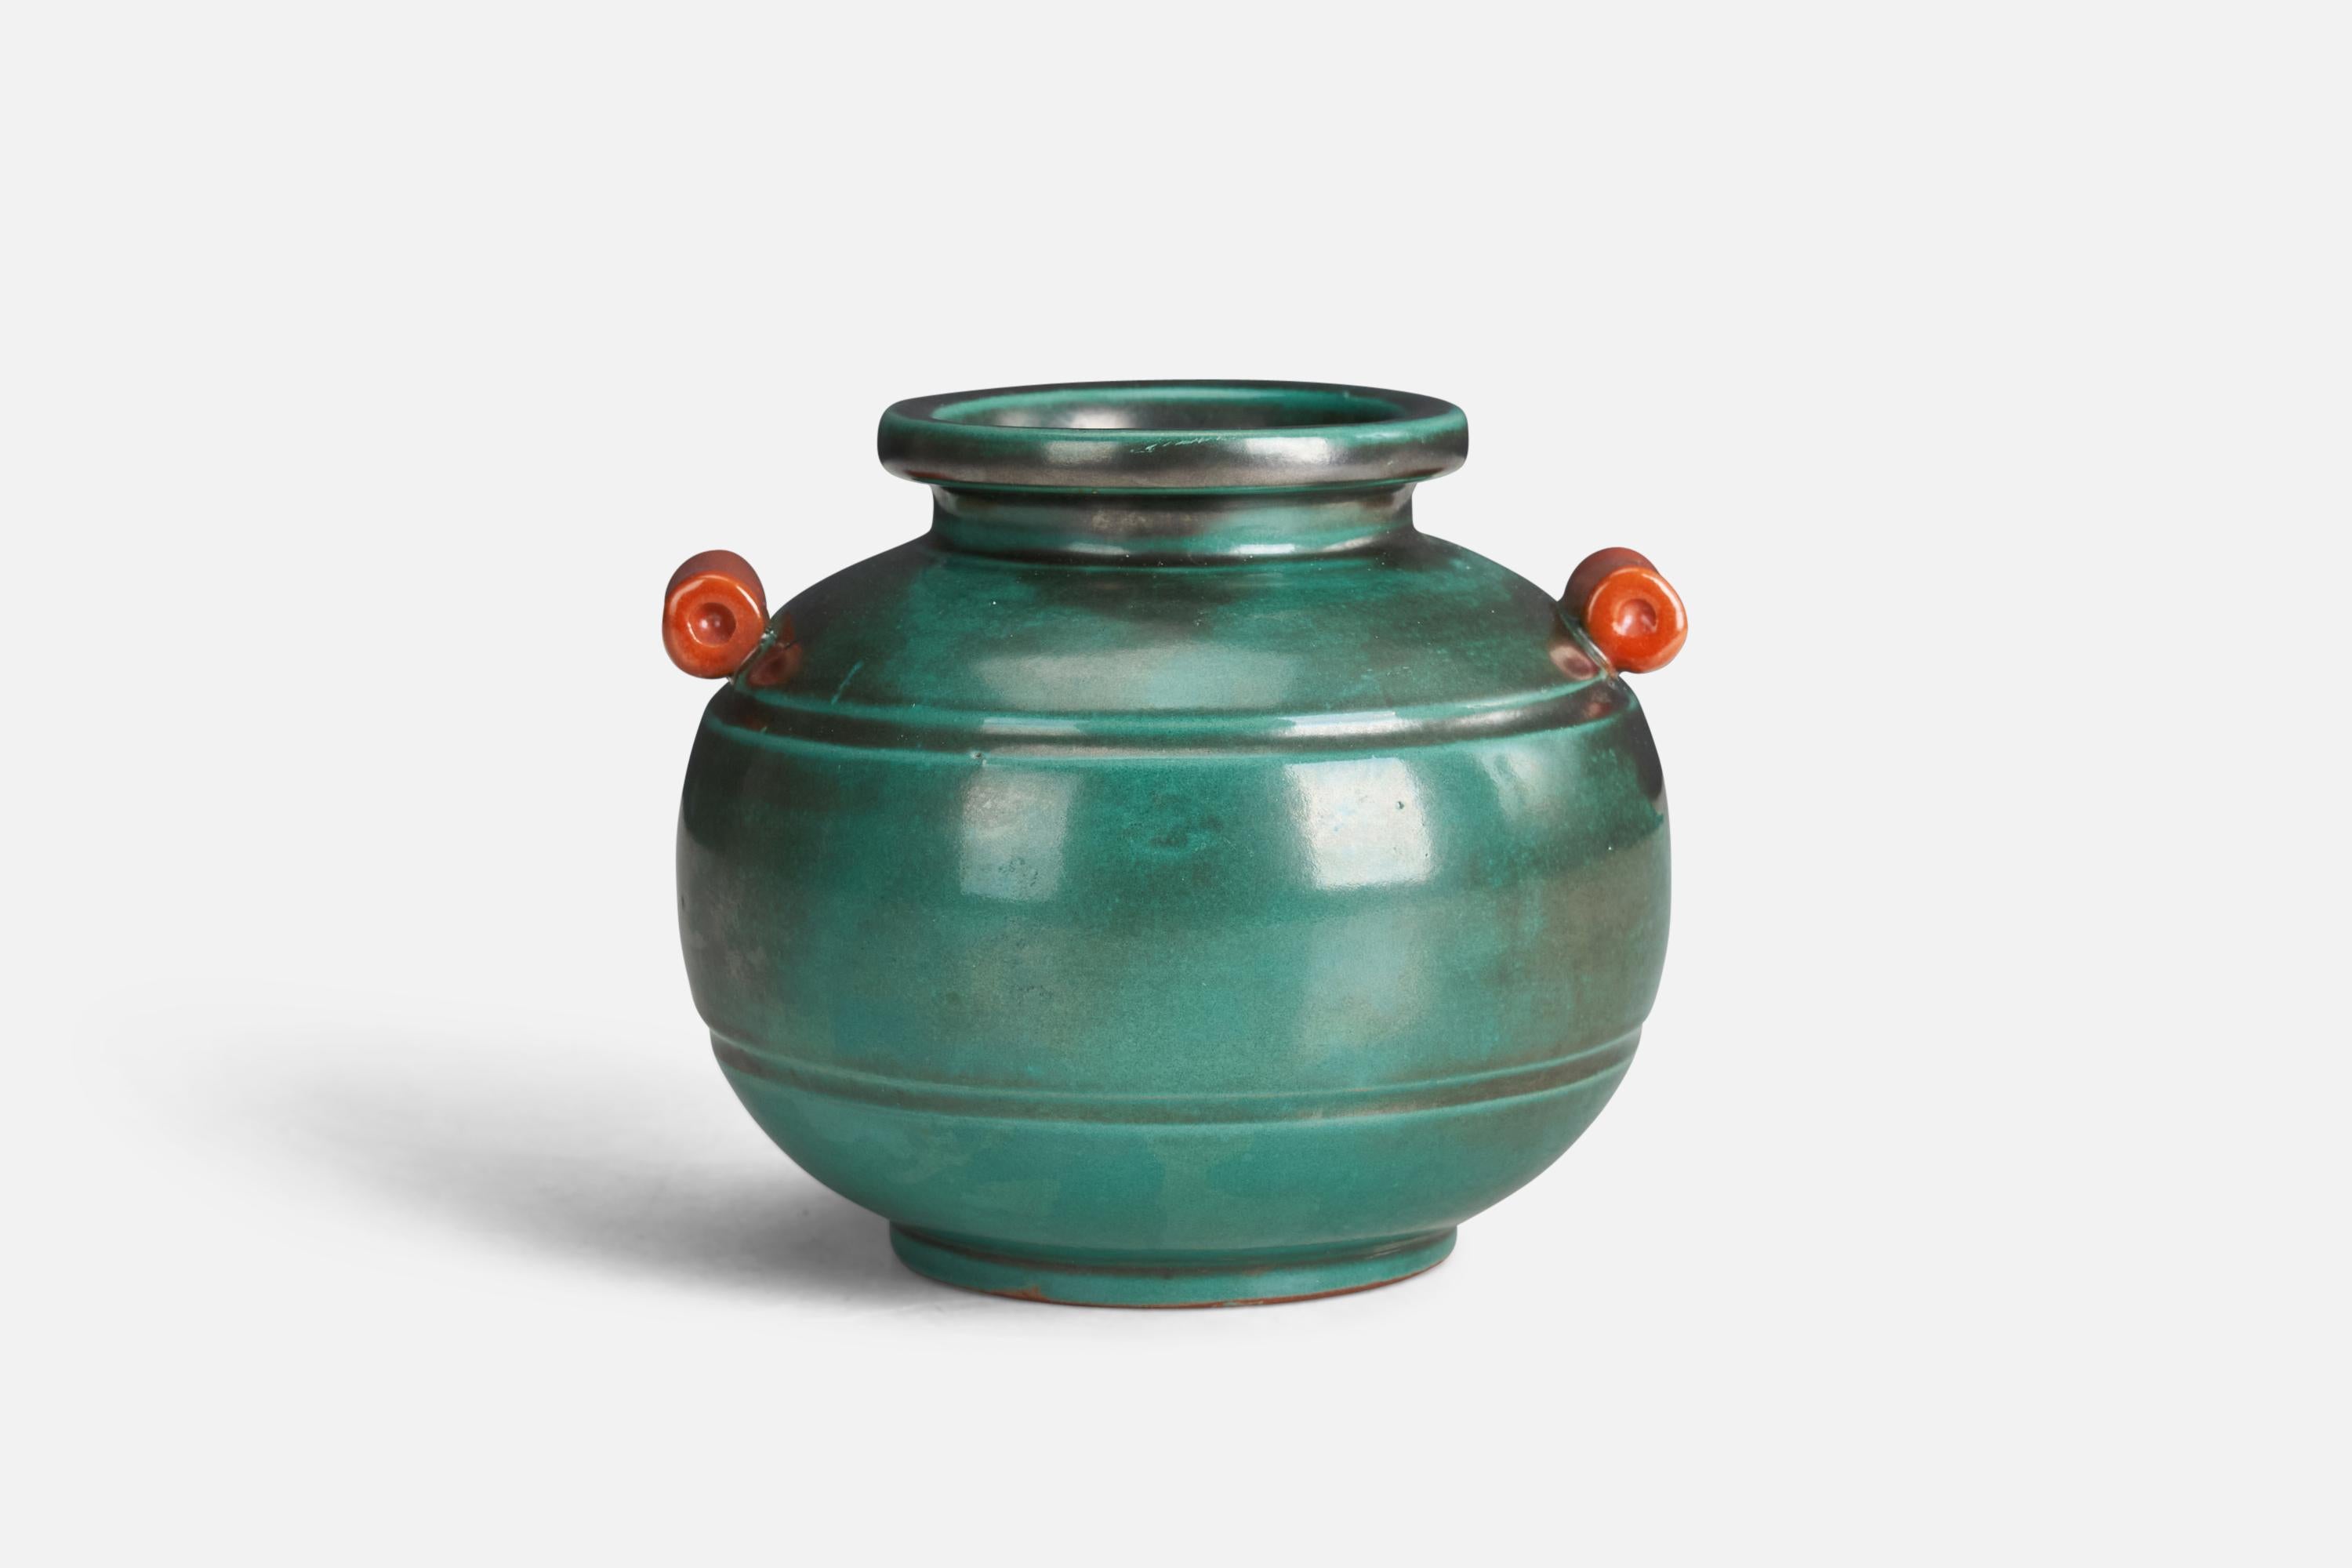 A green and orange-glazed earthenware vase designed and produced by Upsala Ekeby, Sweden, 1940s.